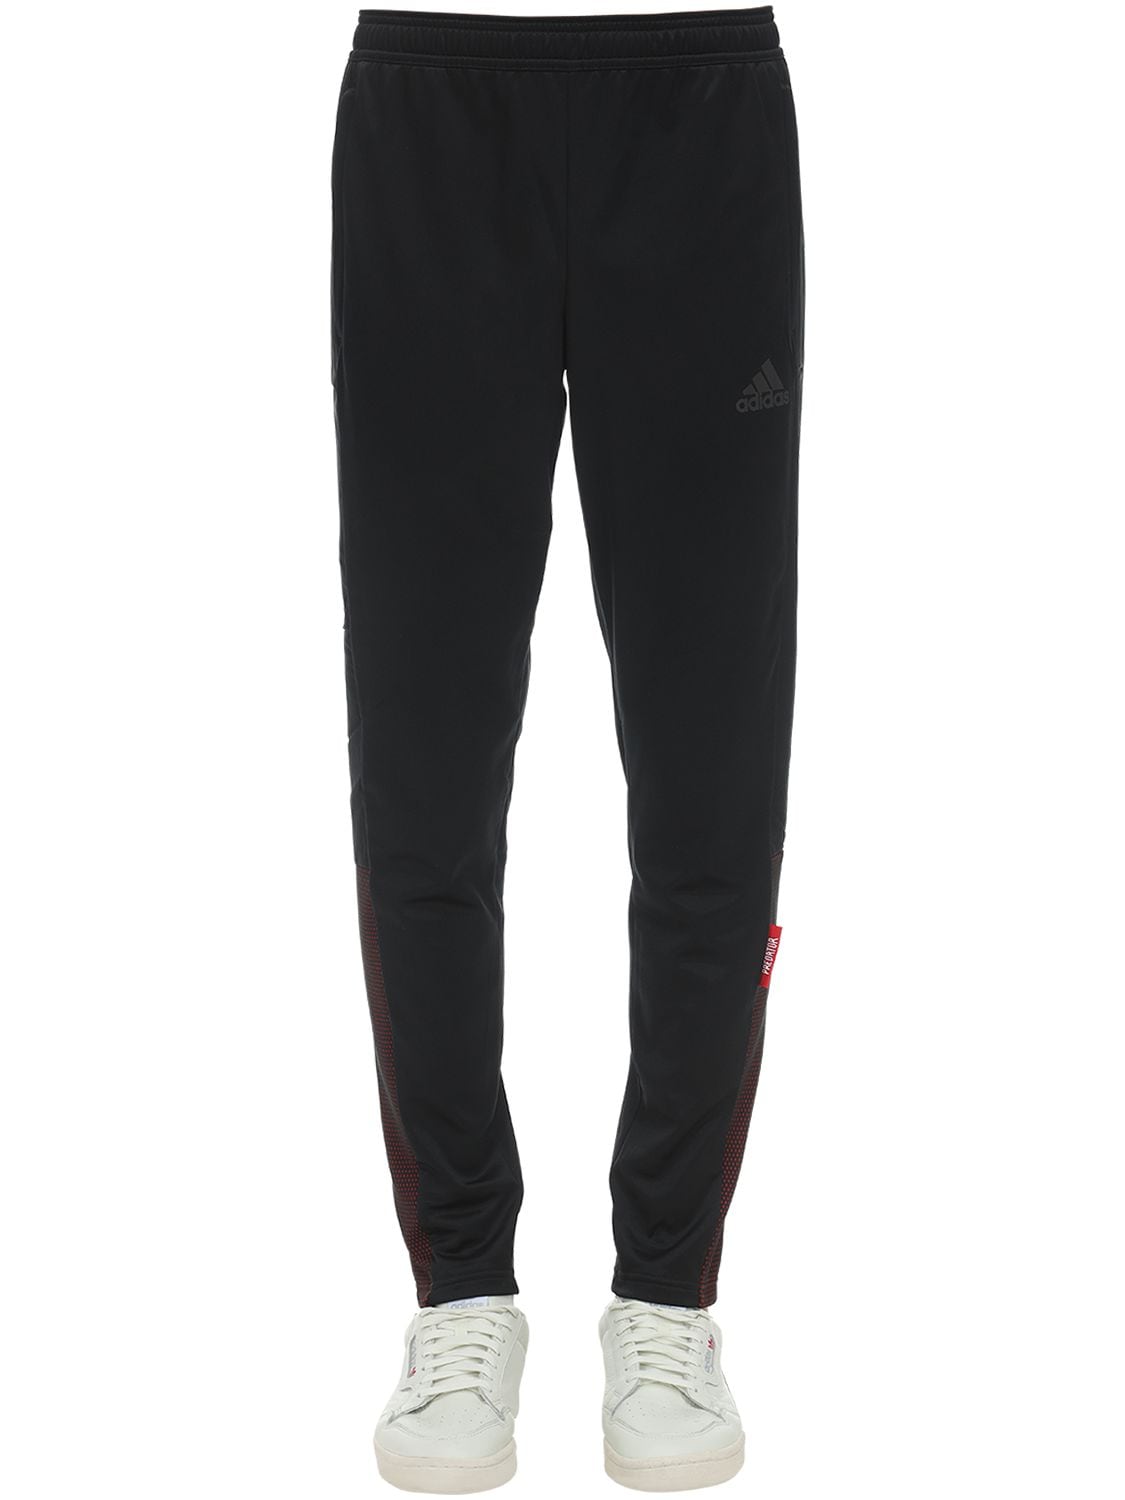 Adidas Football "tiro Pre Pnt"侧边带装饰科技织物裤子 In Black